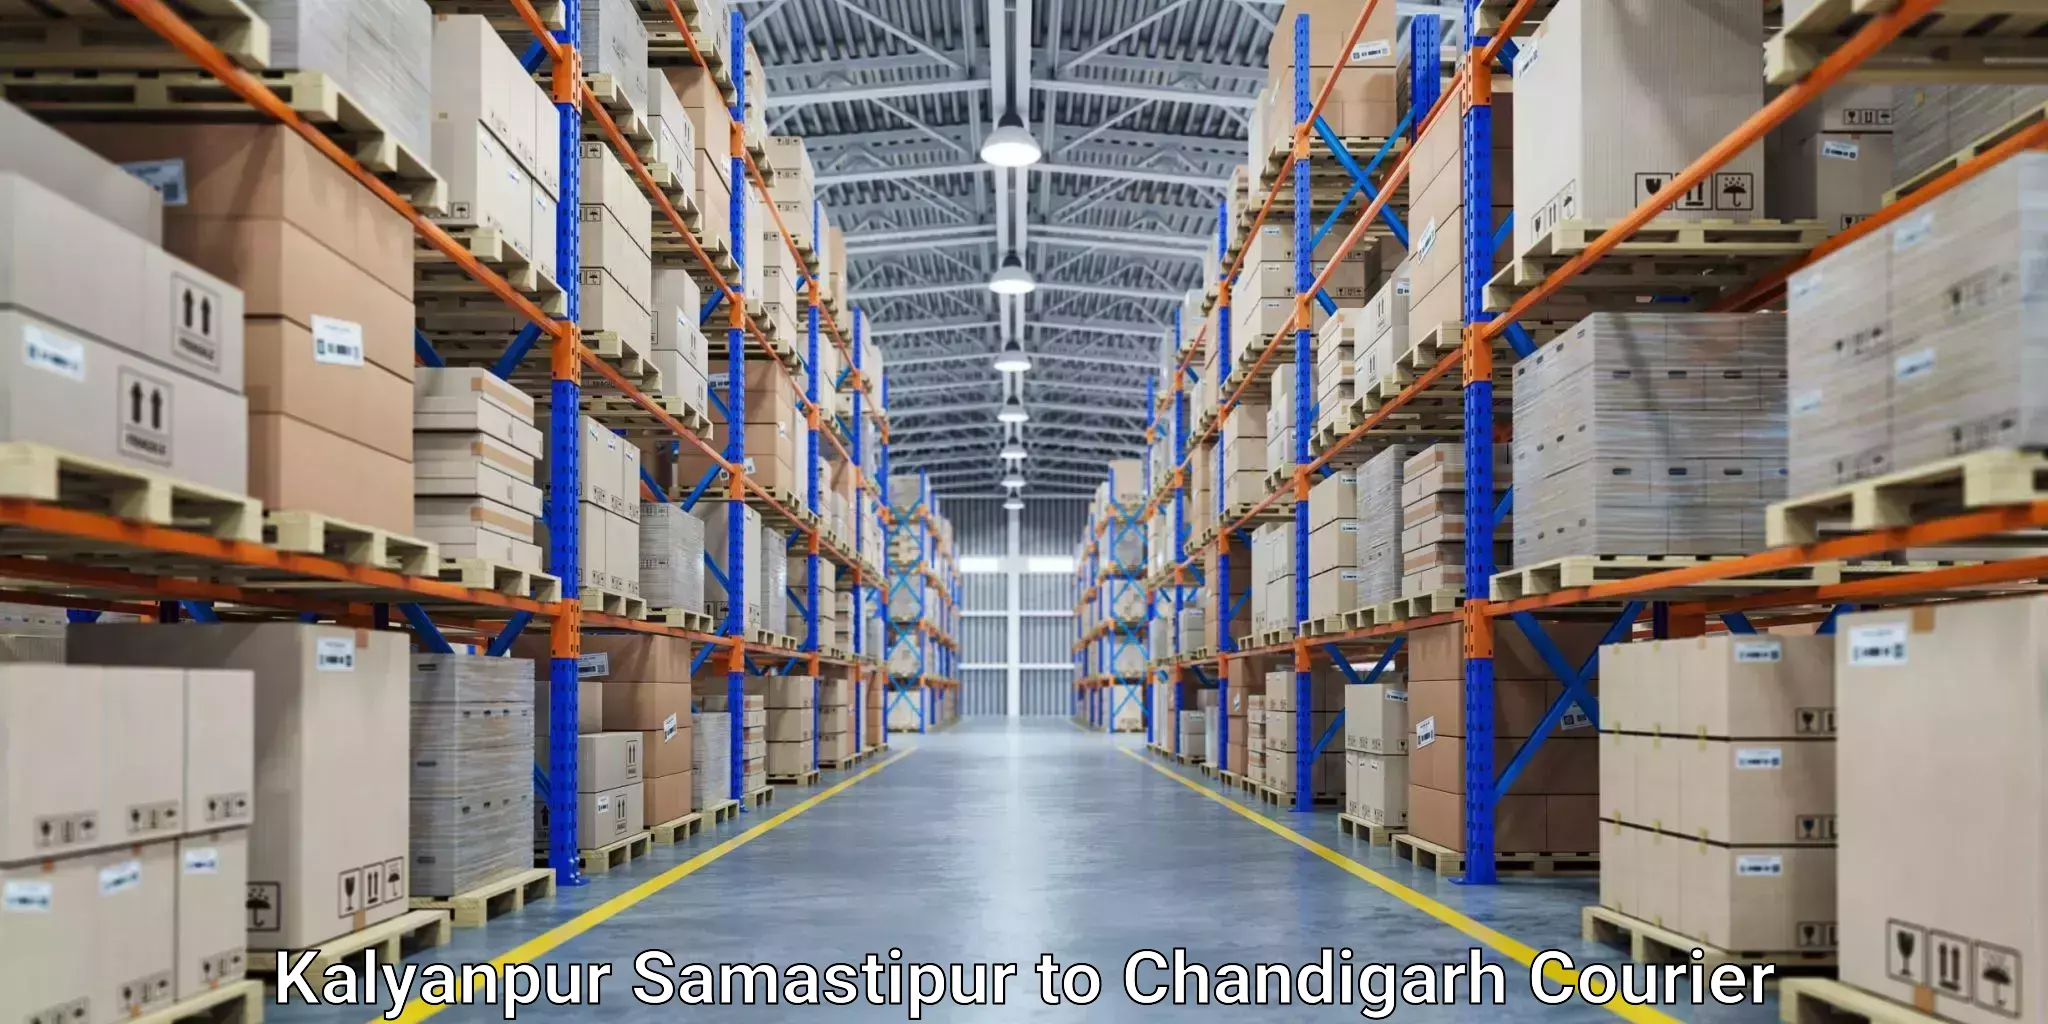 Logistics service provider Kalyanpur Samastipur to Chandigarh